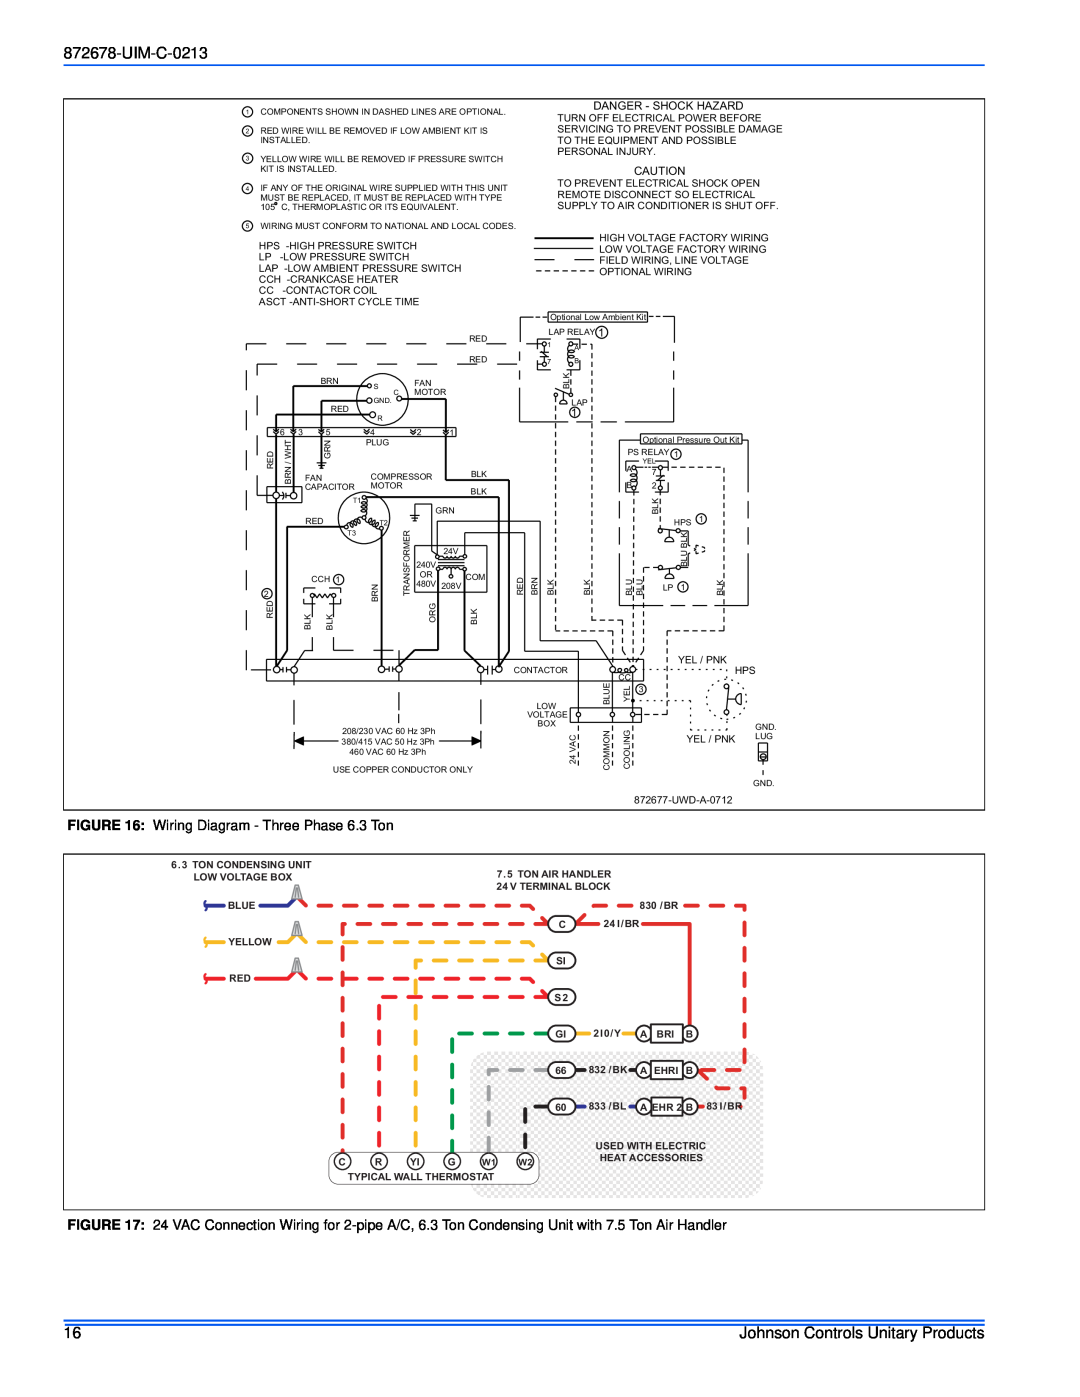 Johnson Controls 13 & 14.5 SEER - TCG(D, YCJ(D, F) Wiring Diagram - Three Phase 6.3 Ton, Johnson Controls Unitary Products 